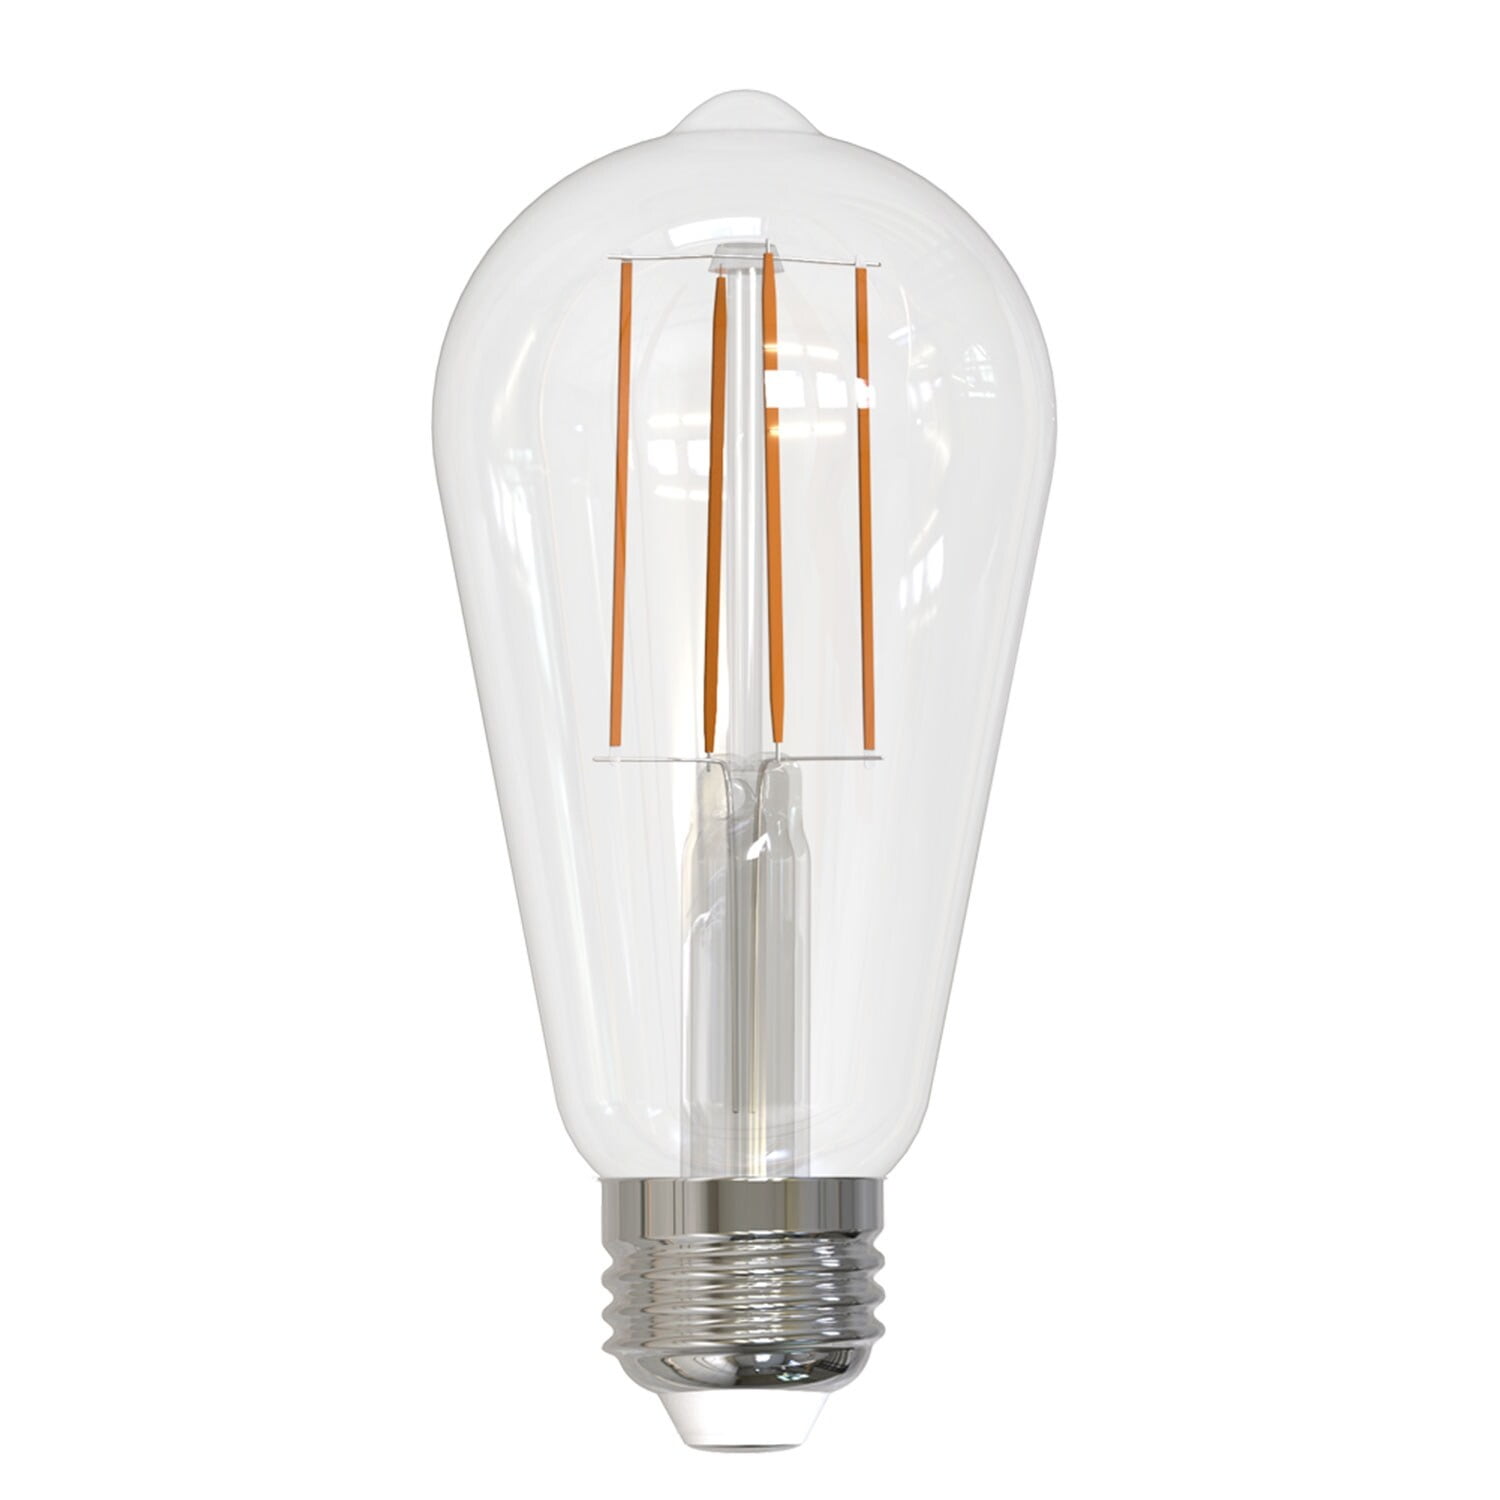 Picture of Bulbrite Pack of (2) 8.5 Watt Dimmable Clear ST18 LED Light Bulbs with Medium (E26) Base  3000K Soft White Light  850 Lumens